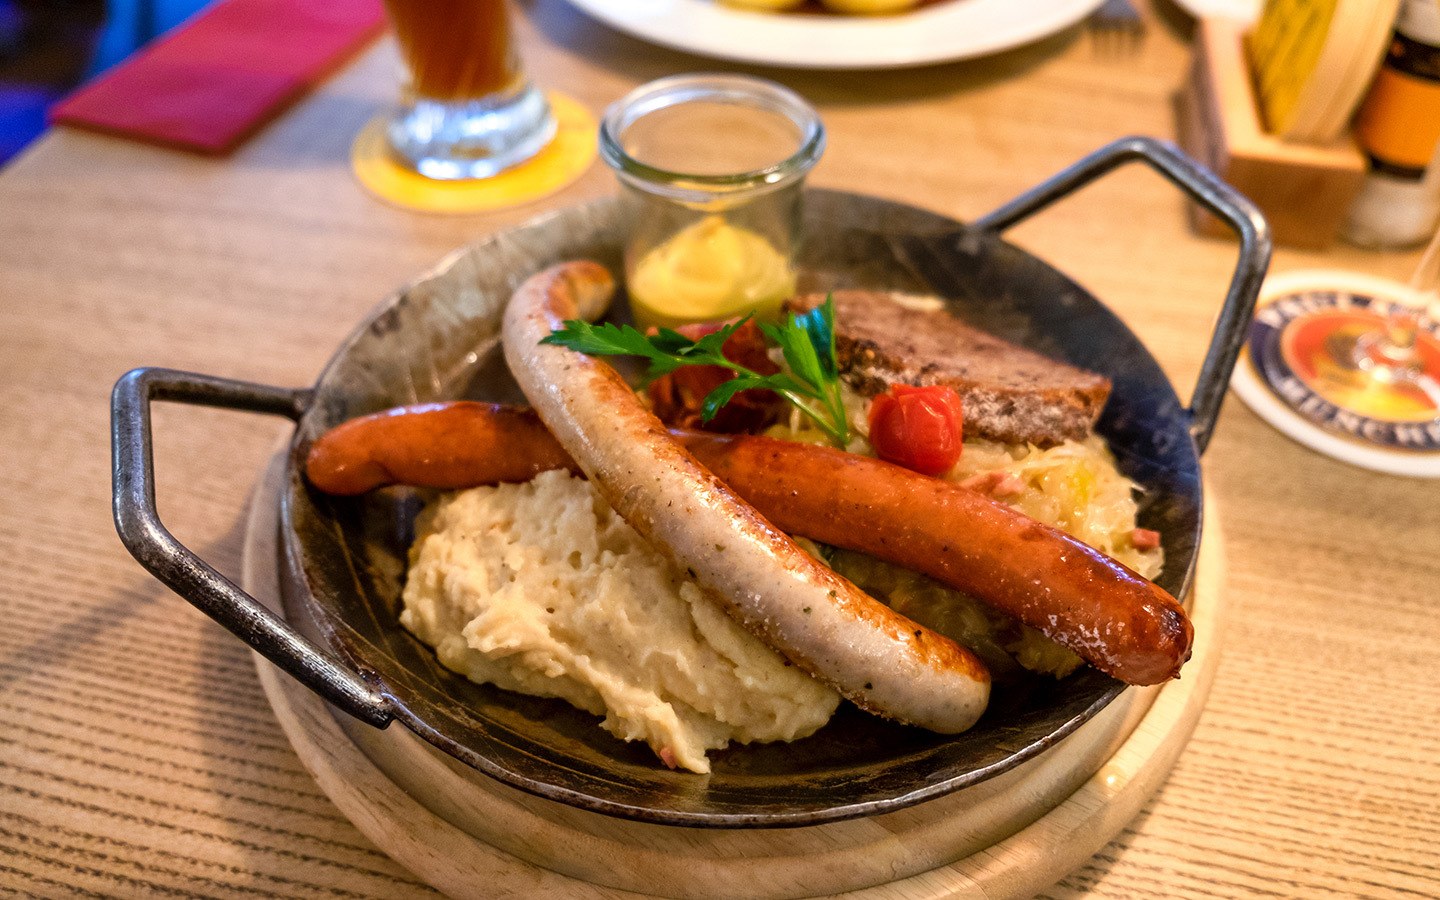 Traditional Bavarian food in Munich, Germany